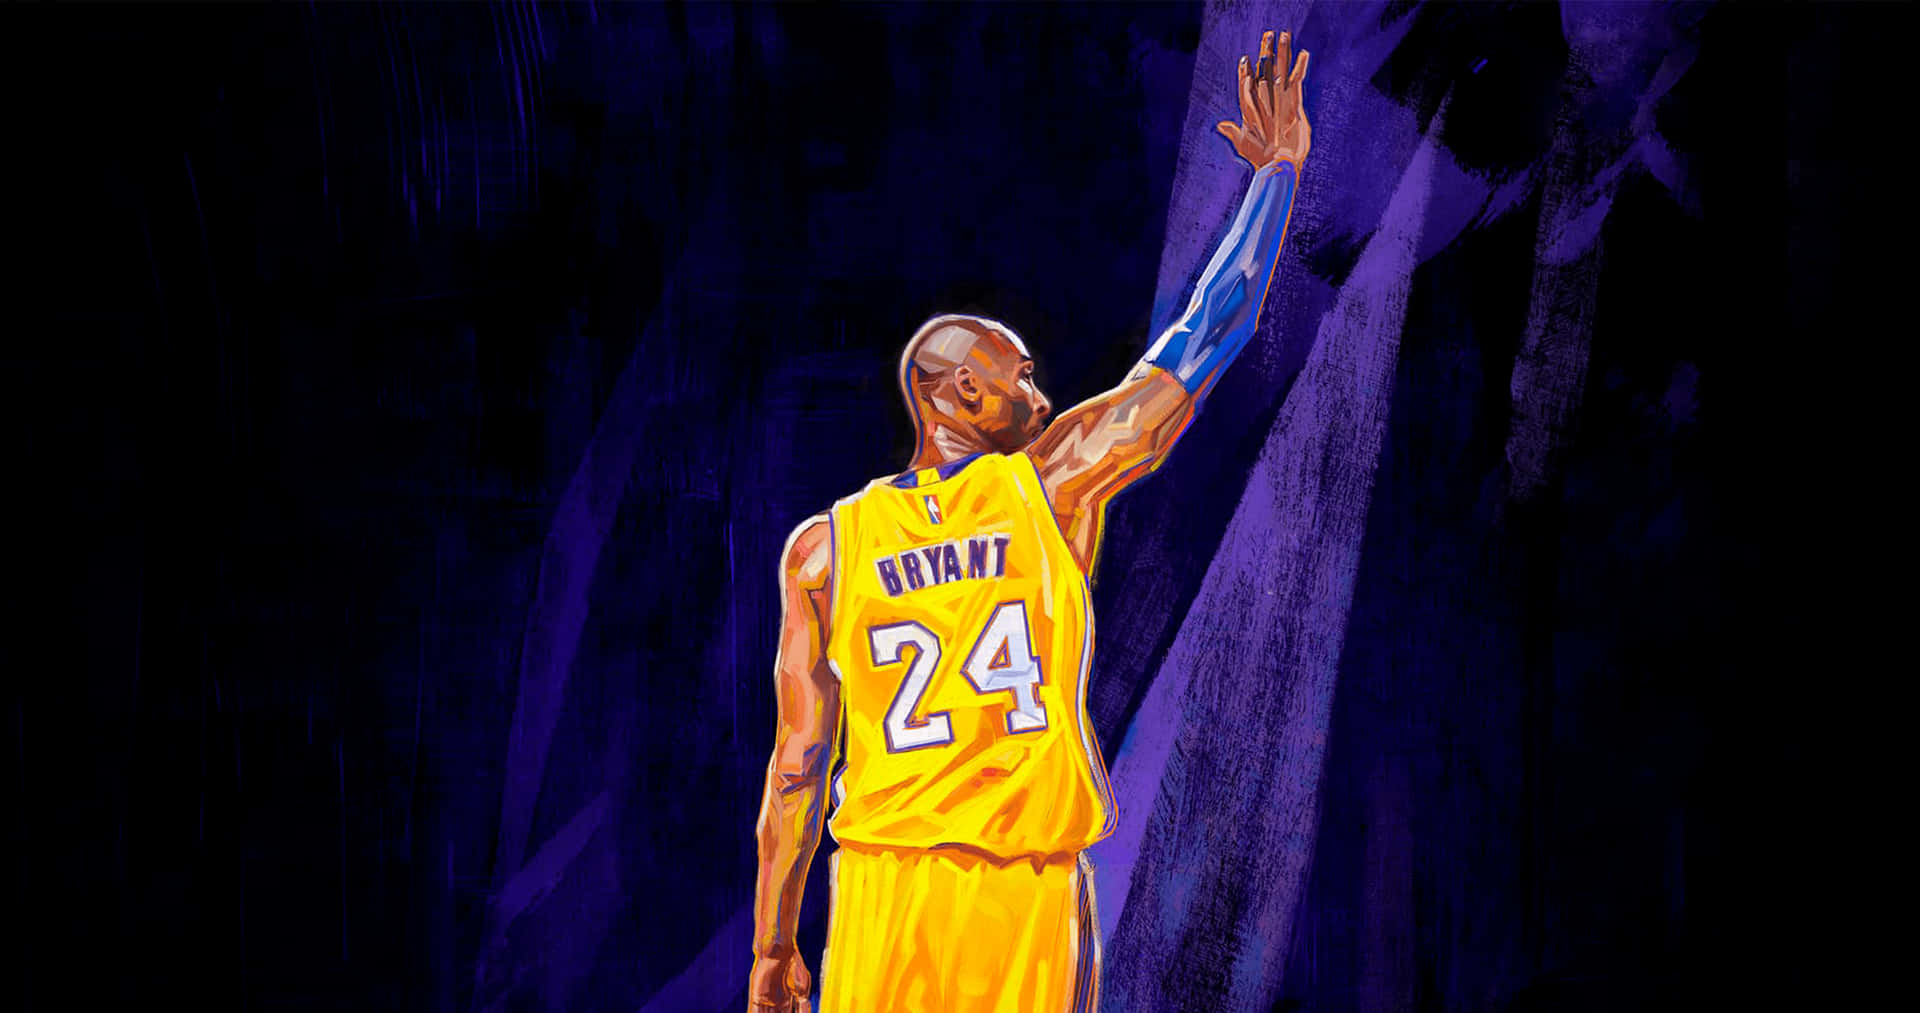 Kobe Bryant Photo Collage NBA Basketball Star Wallpaper Mural